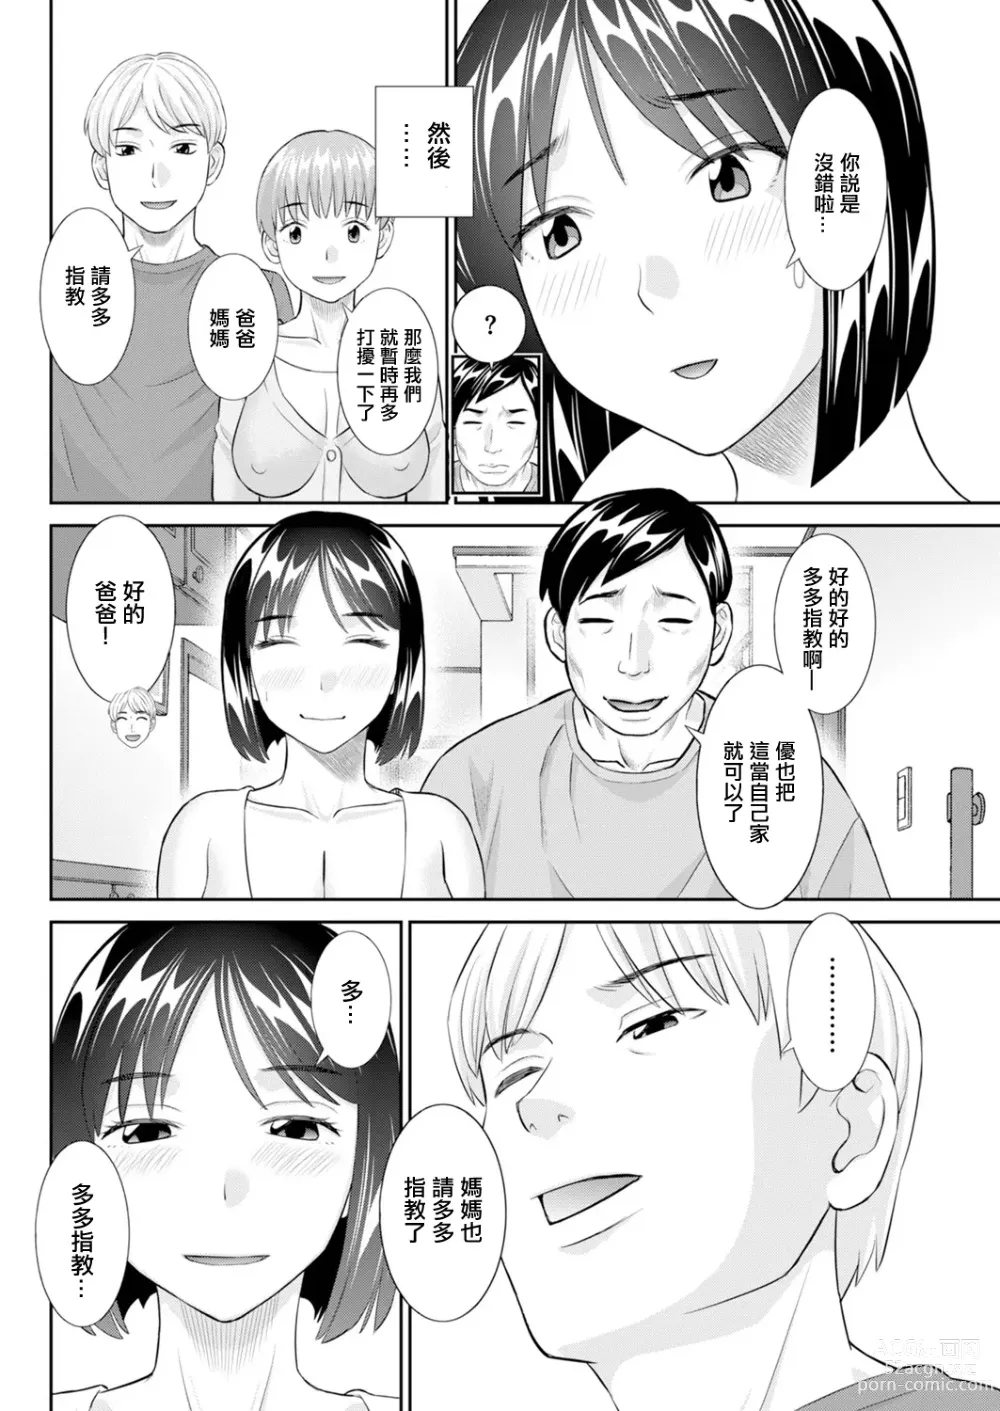 Page 2 of manga 每天出軌妻